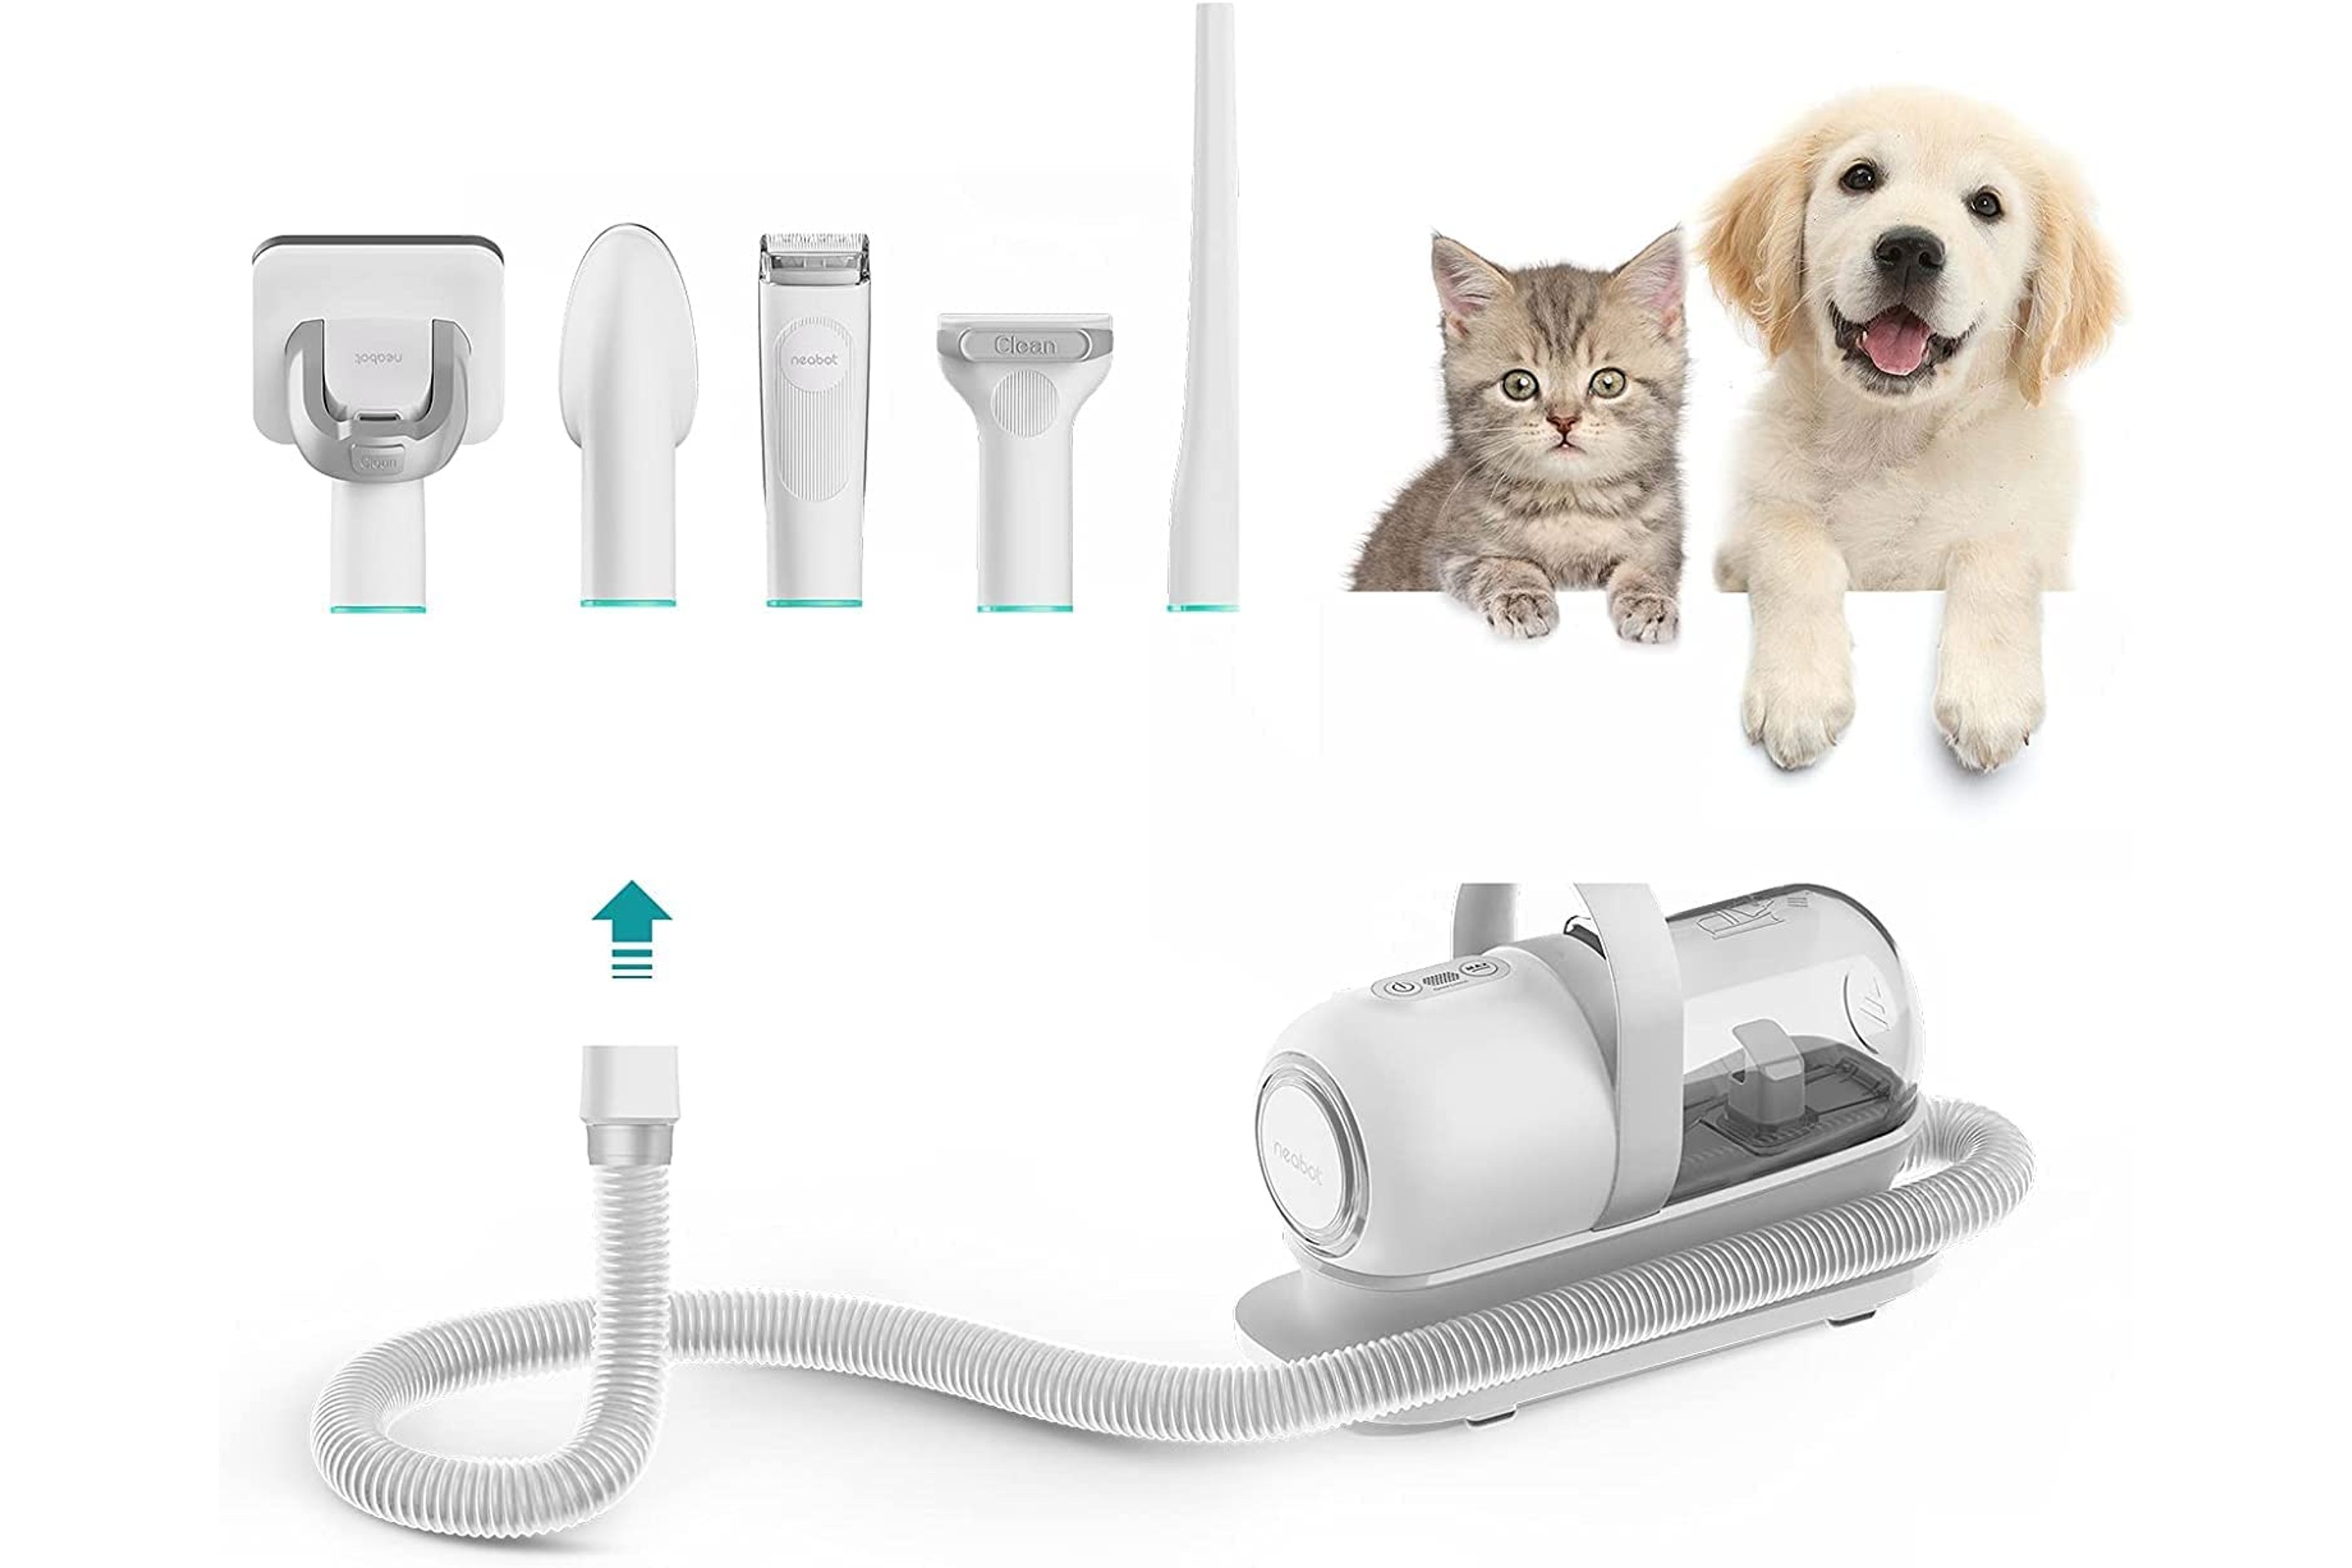 The Neabot Pro Pet Grooming Kit